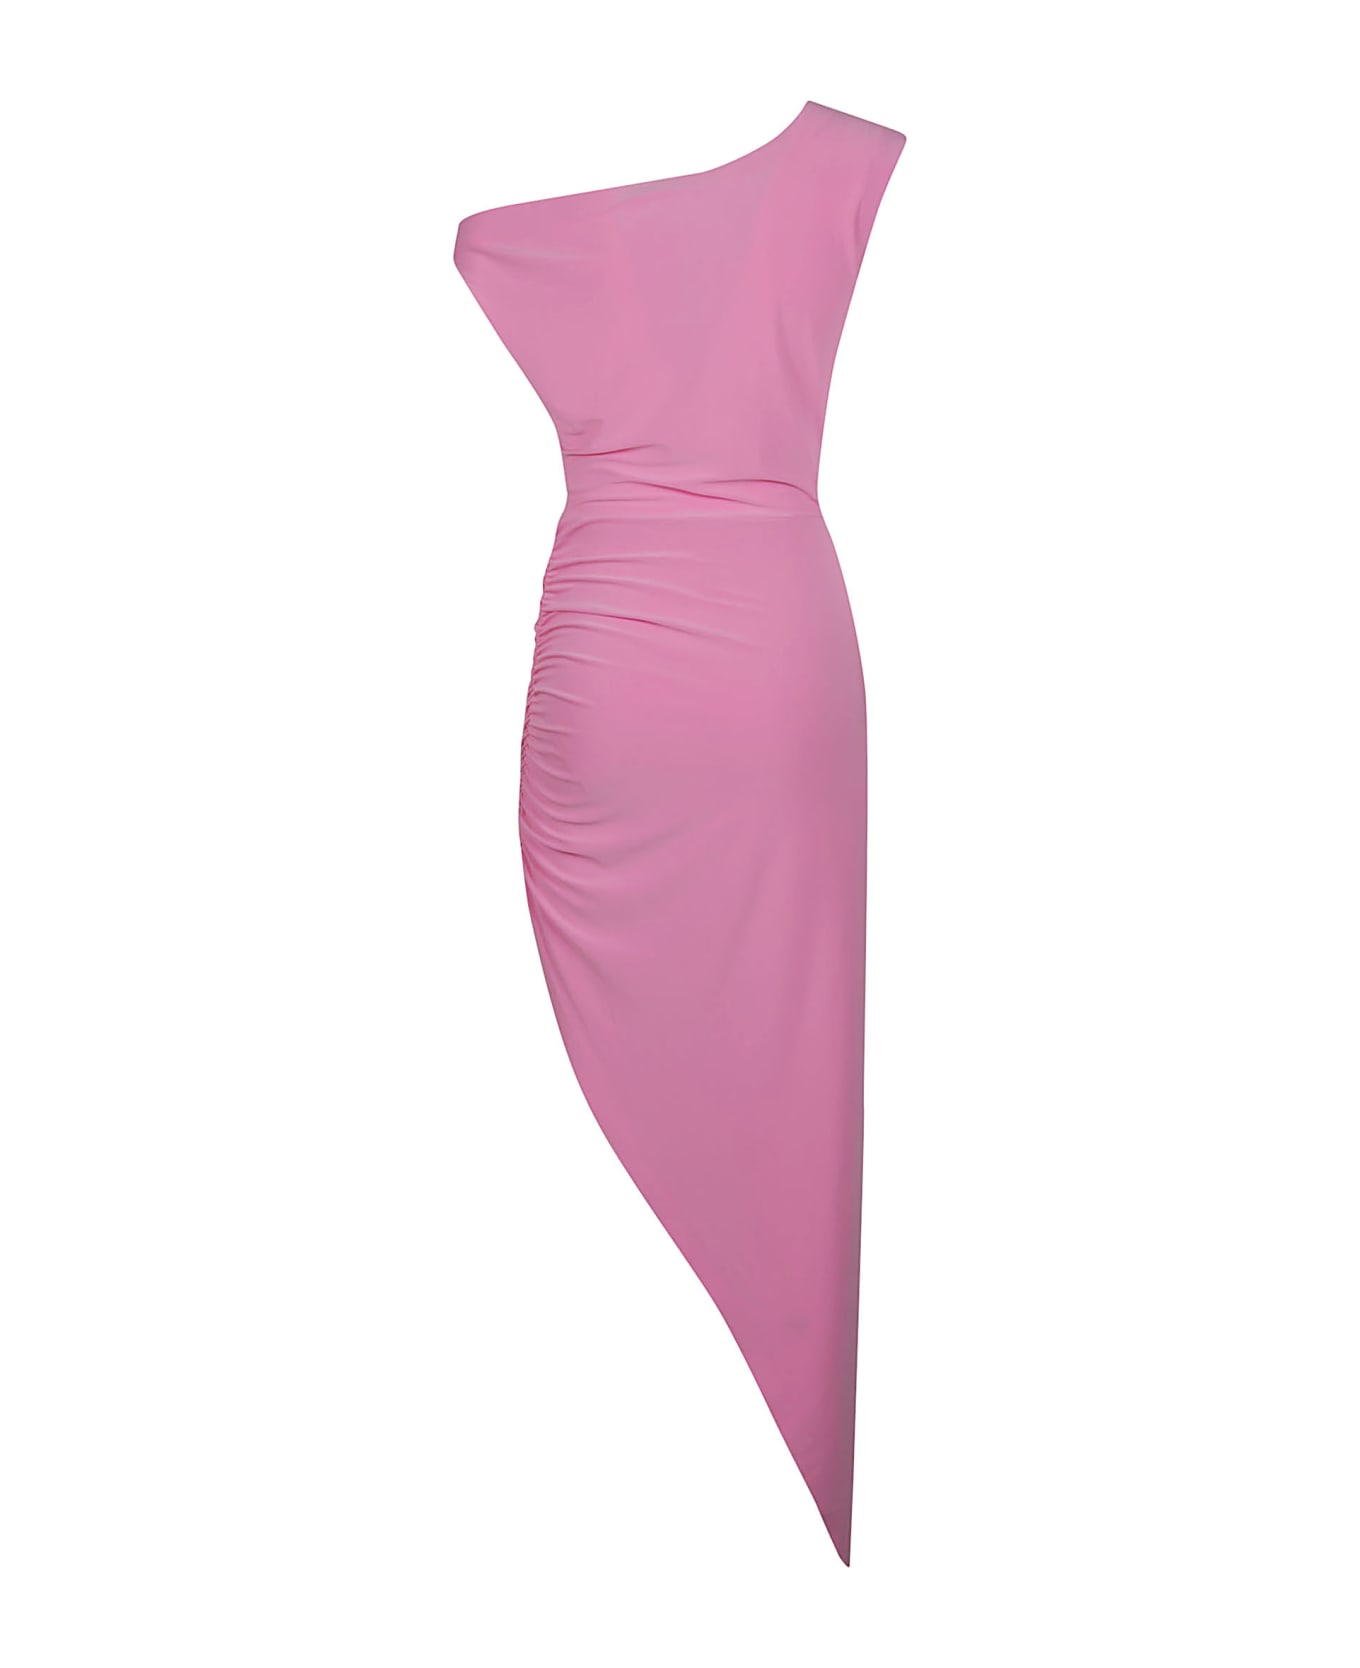 Norma Kamali Drop Shoulder Side Drape Dress - Candy Pink